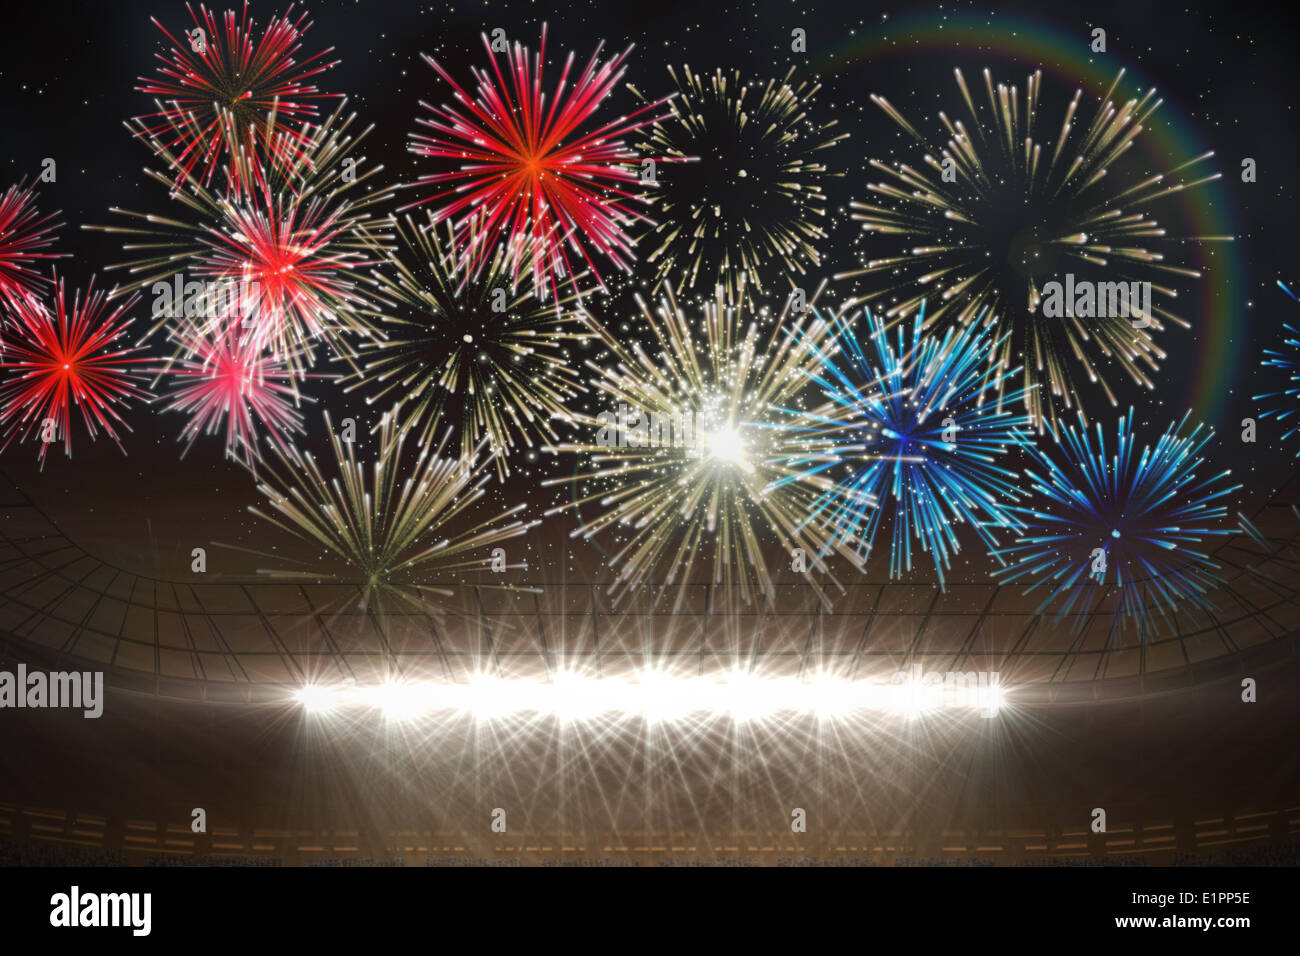 Fireworks exploding over football stadium Stock Photo